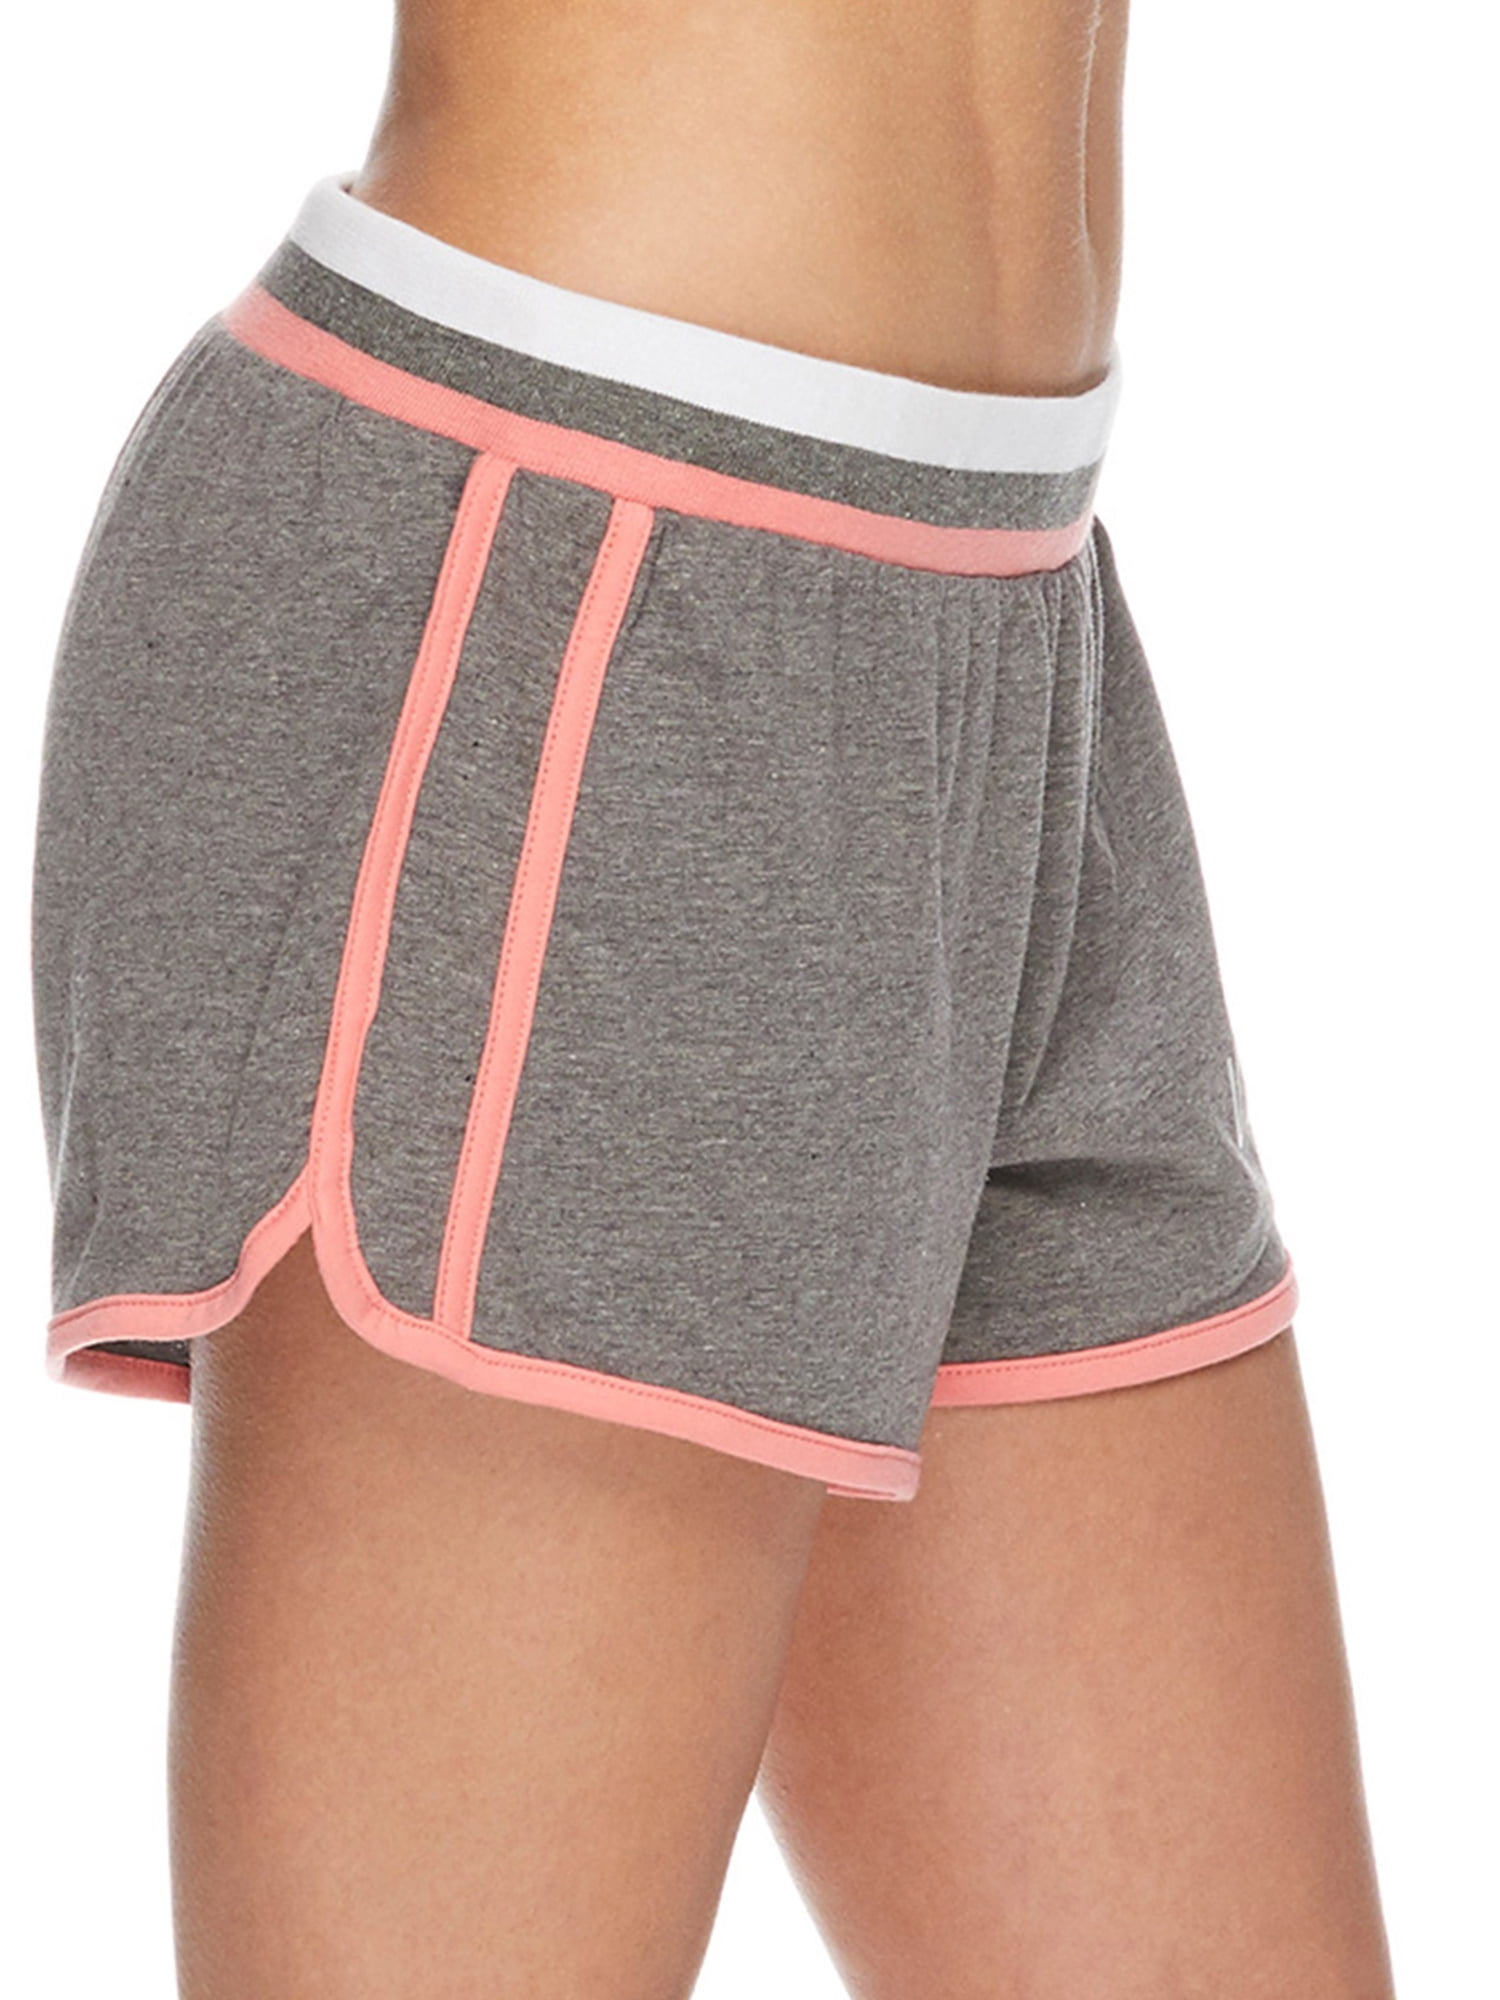 Polo Assn U.S Womens Racerback Tank Top and Pajama Lounge Shorts Sets 